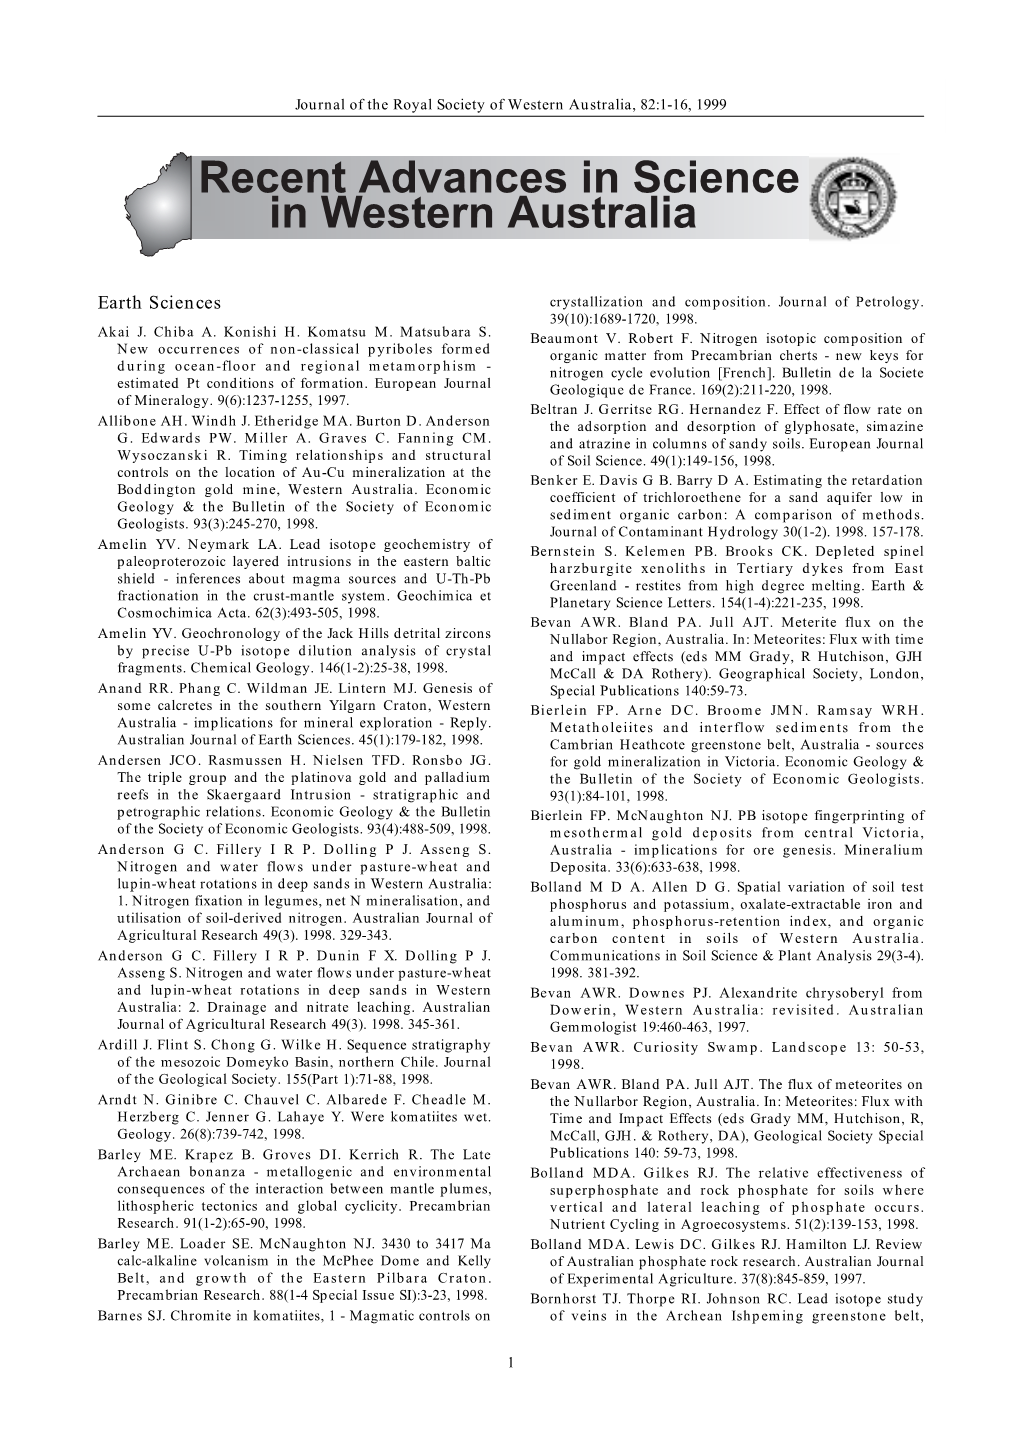 Recent Advances in Science in Western Australia